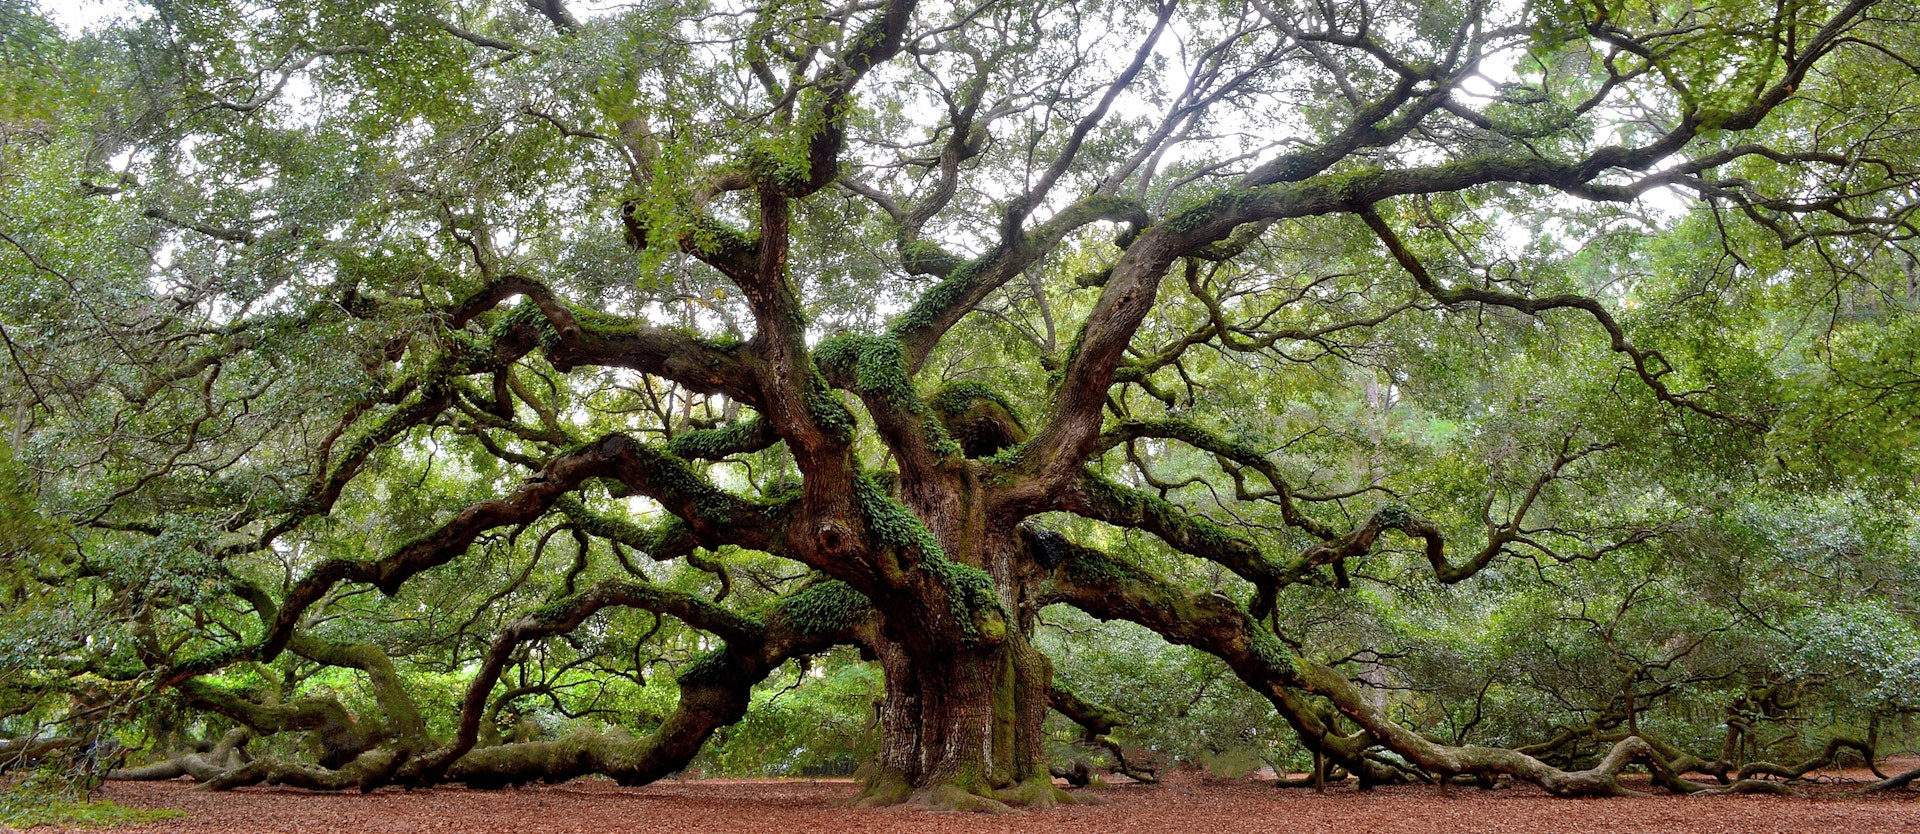 Angel Oak tree on St. Johns Island near Charleston, SC